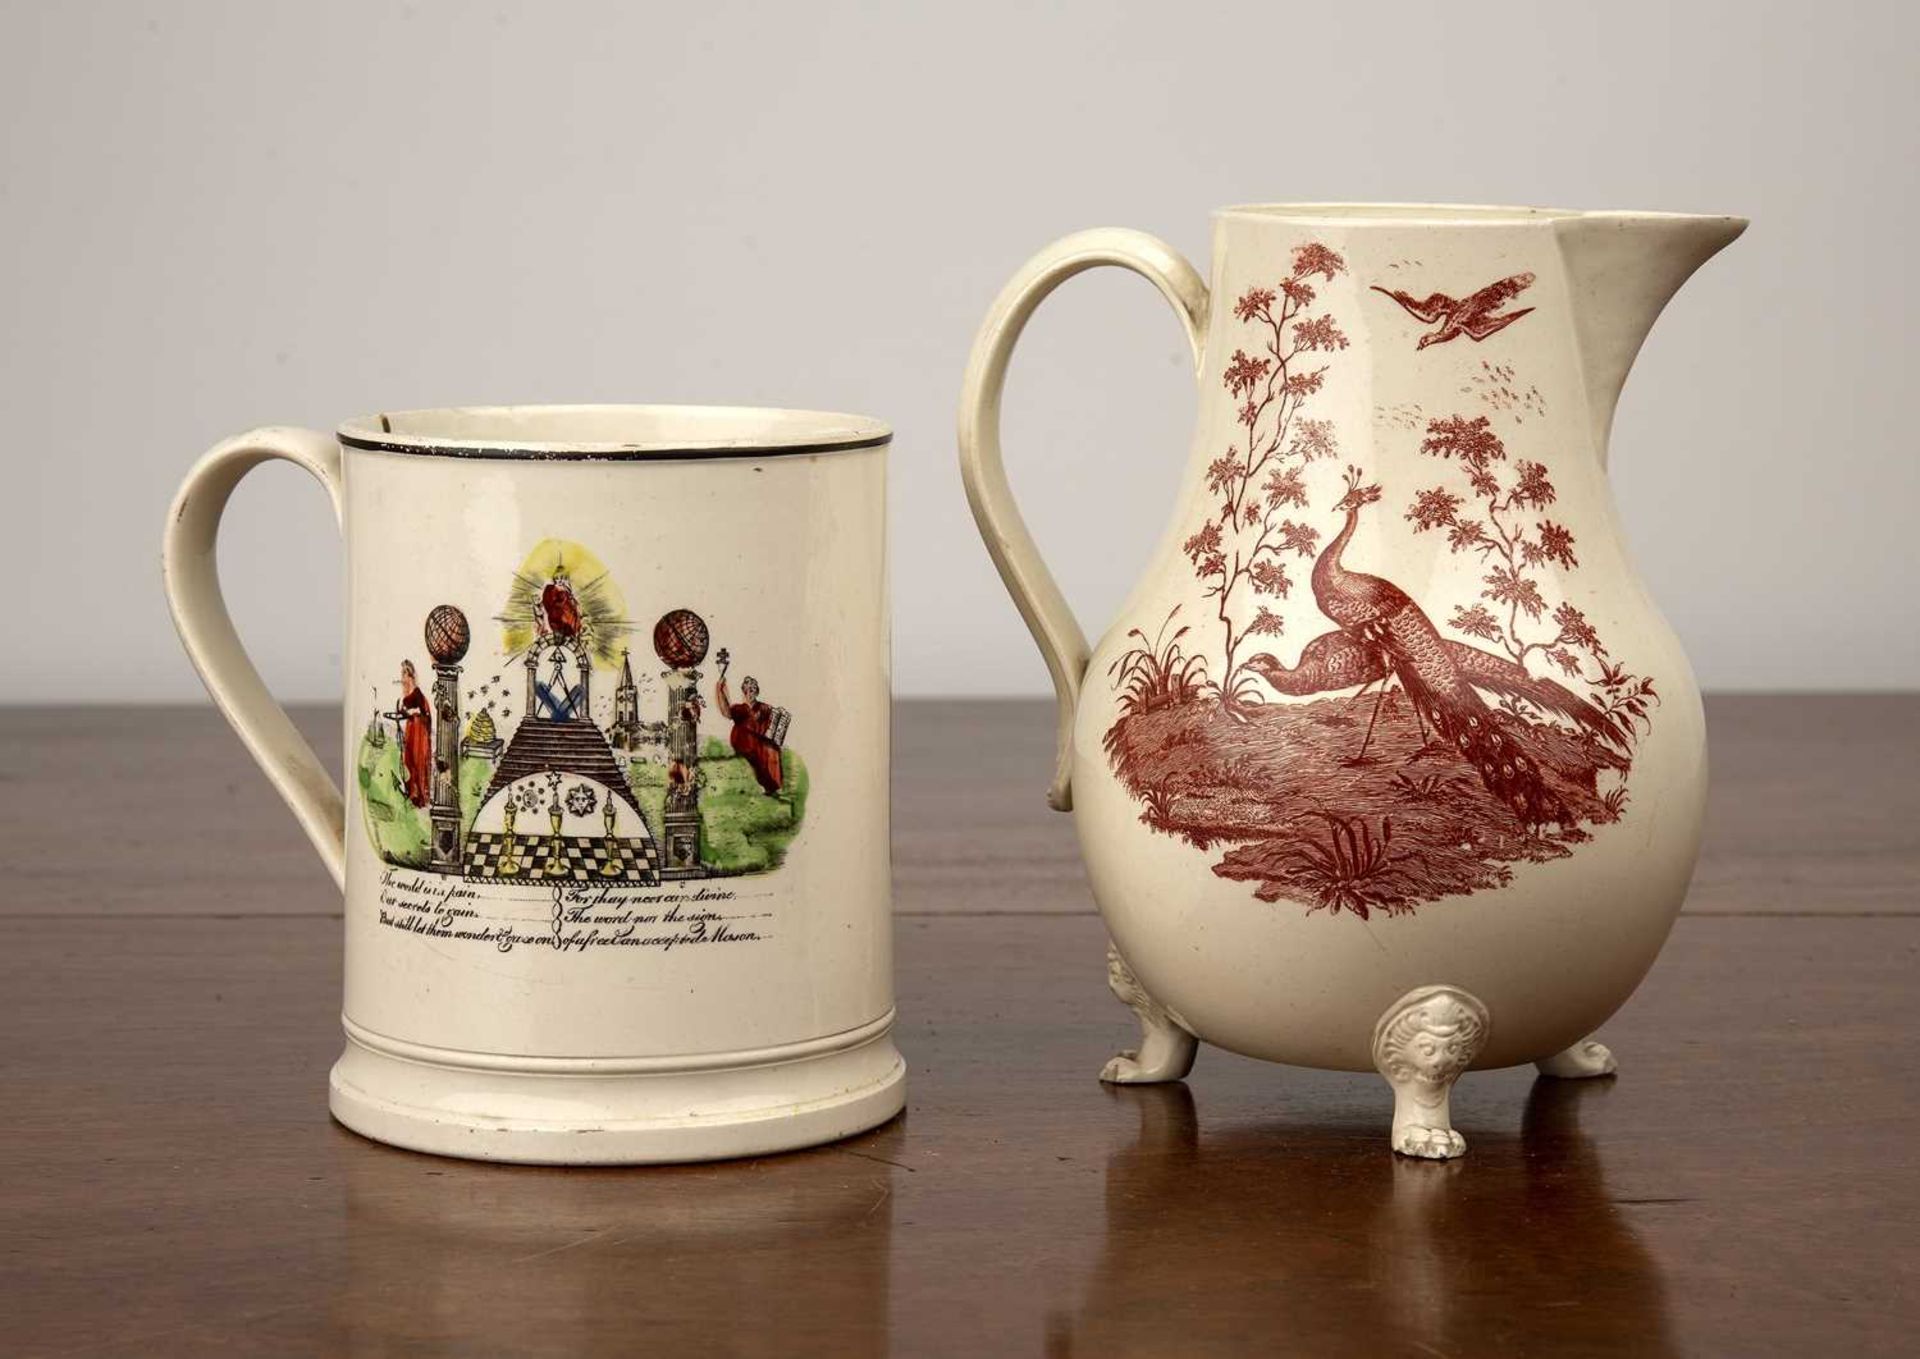 Creamware jug and a Masonic creamware frog mug 18th/19th Century, the jug transfer printed with